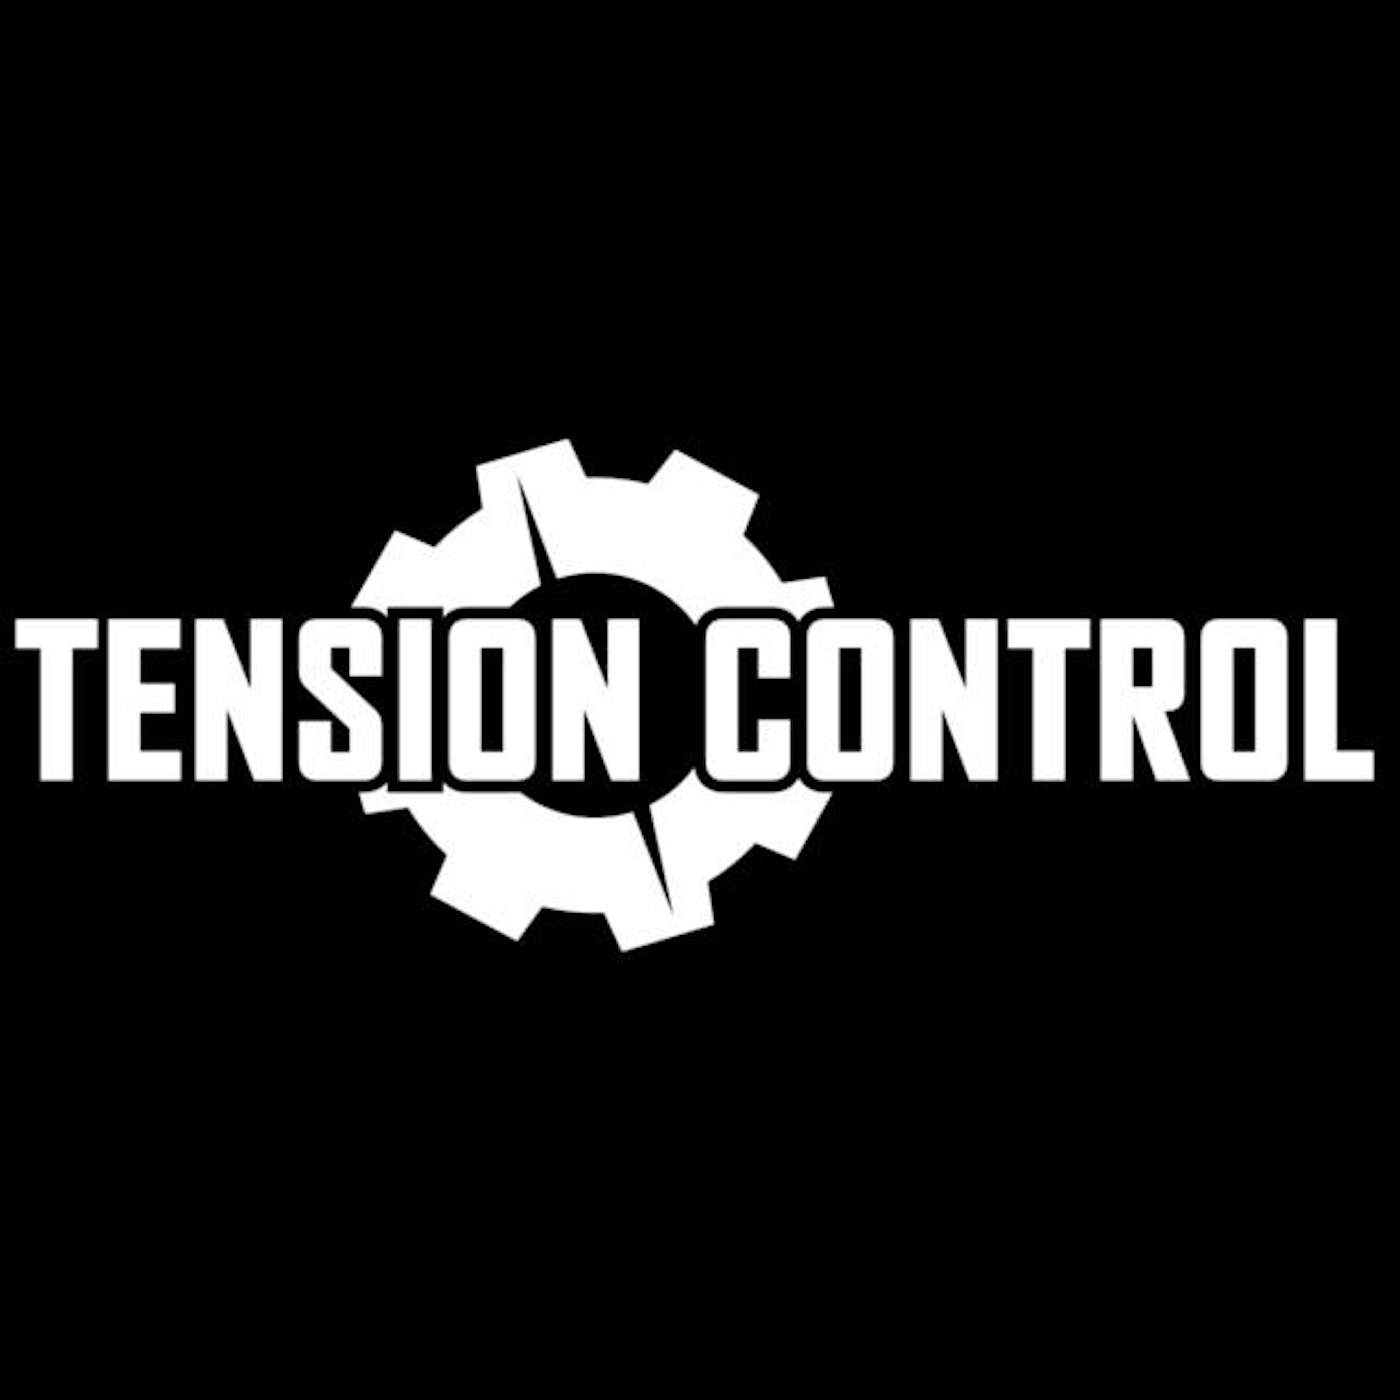 TENSION CONTROL